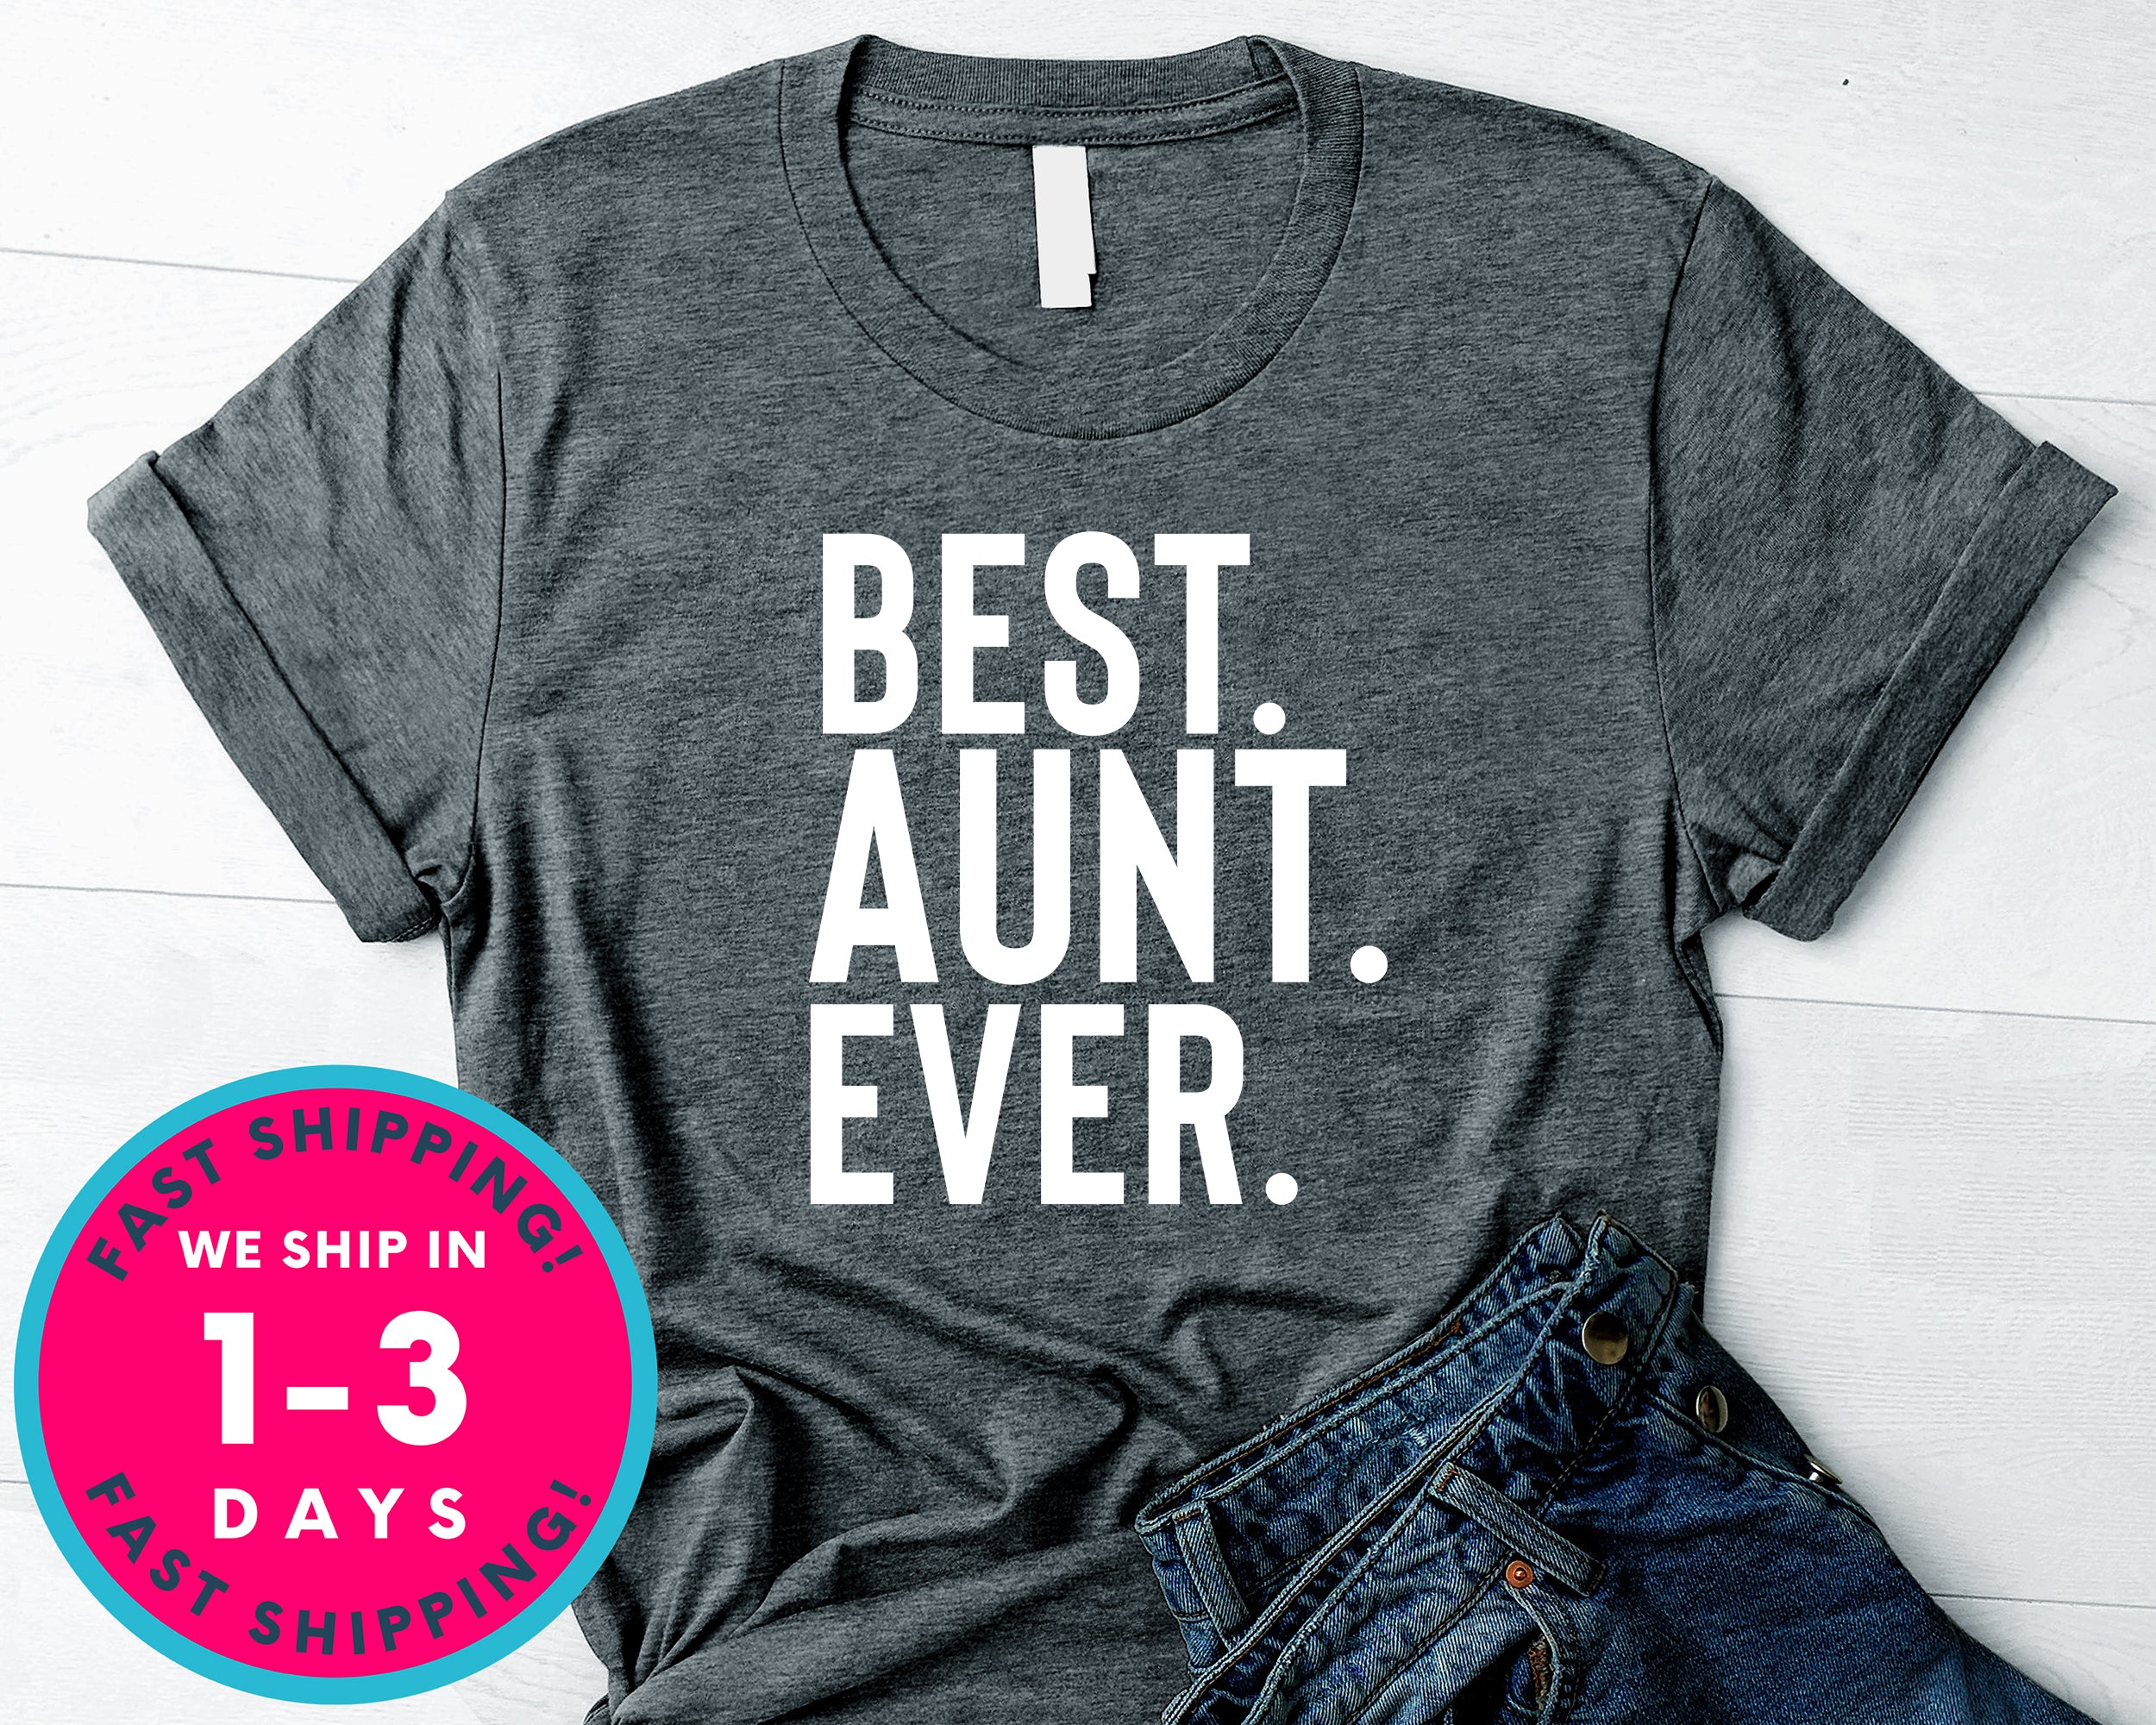 Best Aunt Ever T-Shirt - Family Shirt